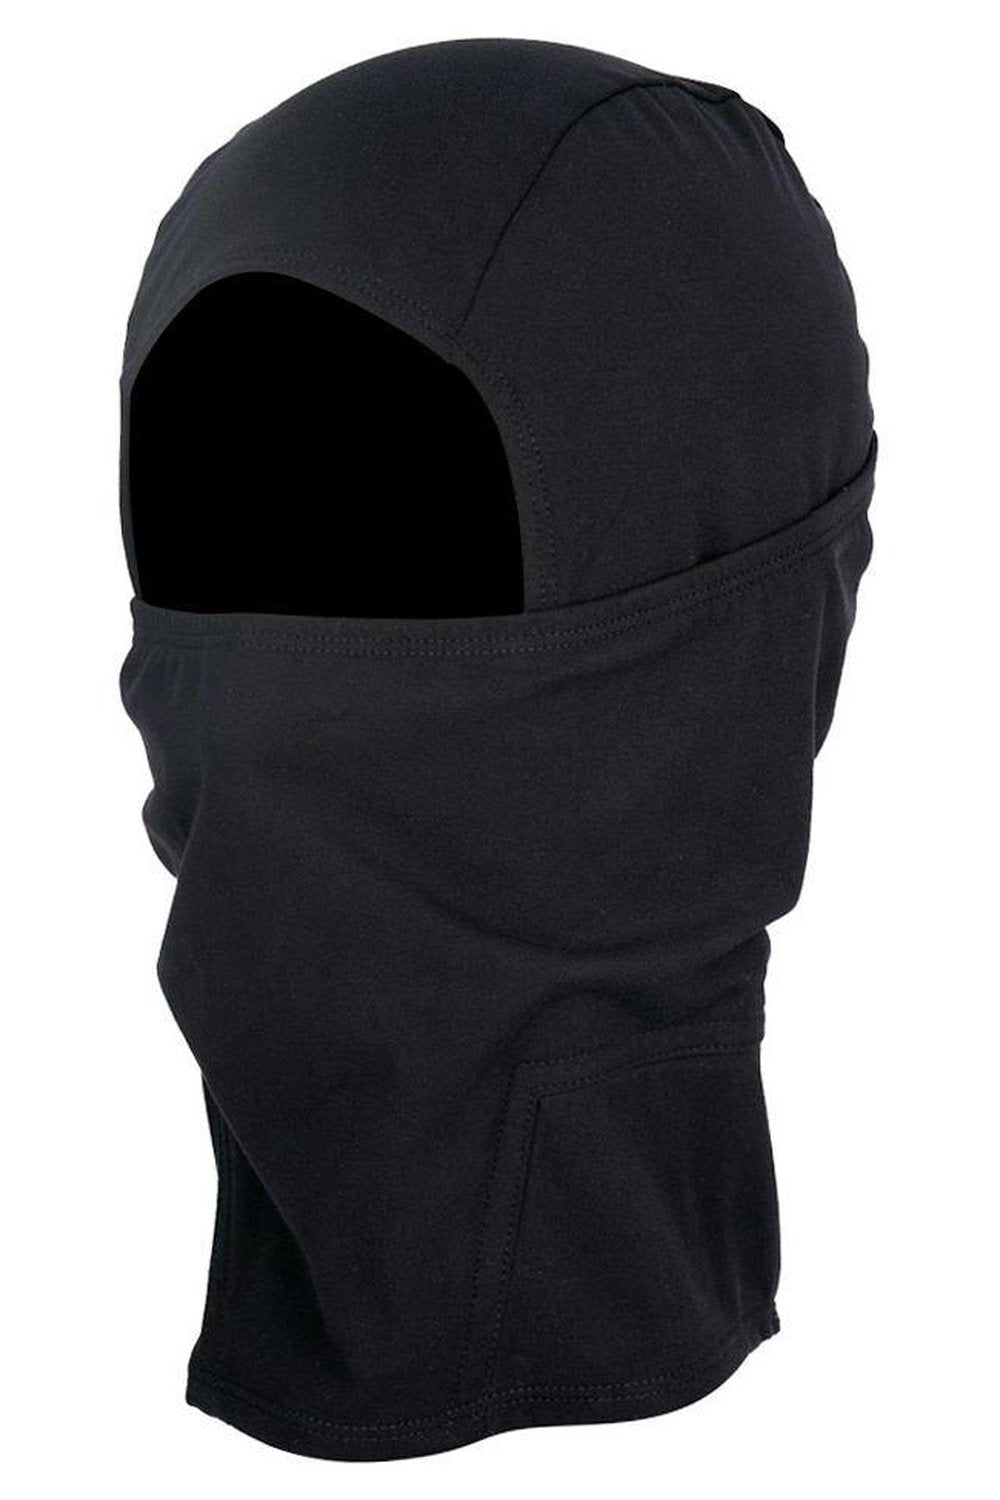 Sundried Thermal Cycle Balaclava Hats Default Black SD0312 Black Activewear